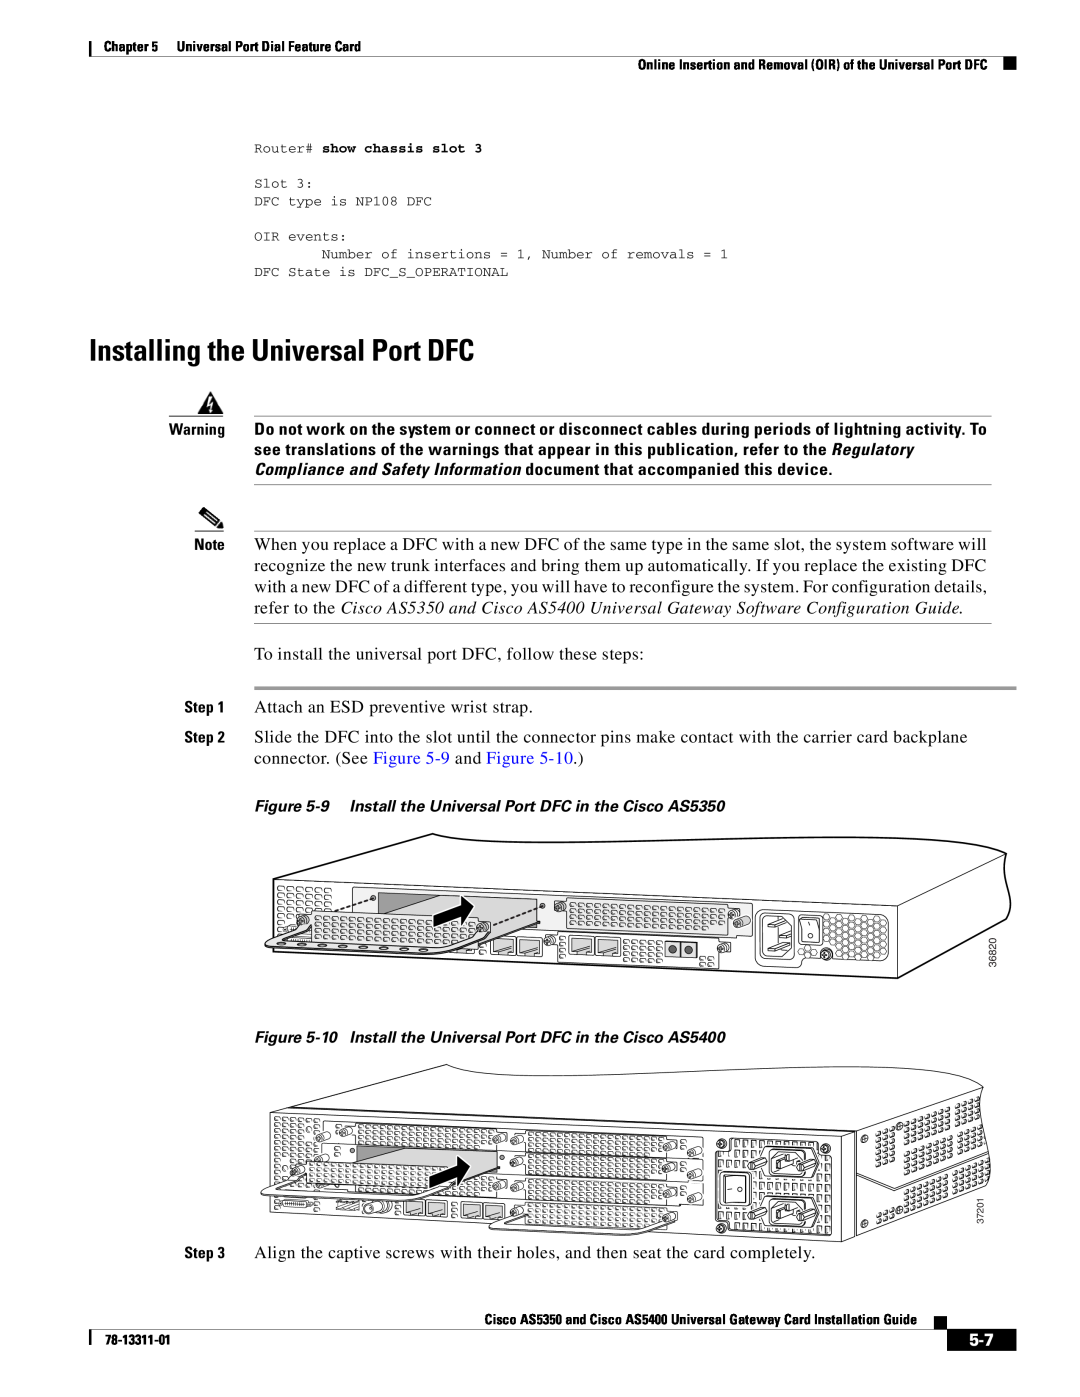 Cisco Systems AS5400 manual Installing the Universal Port DFC, 9 Install the Universal Port DFC in the Cisco AS5350 